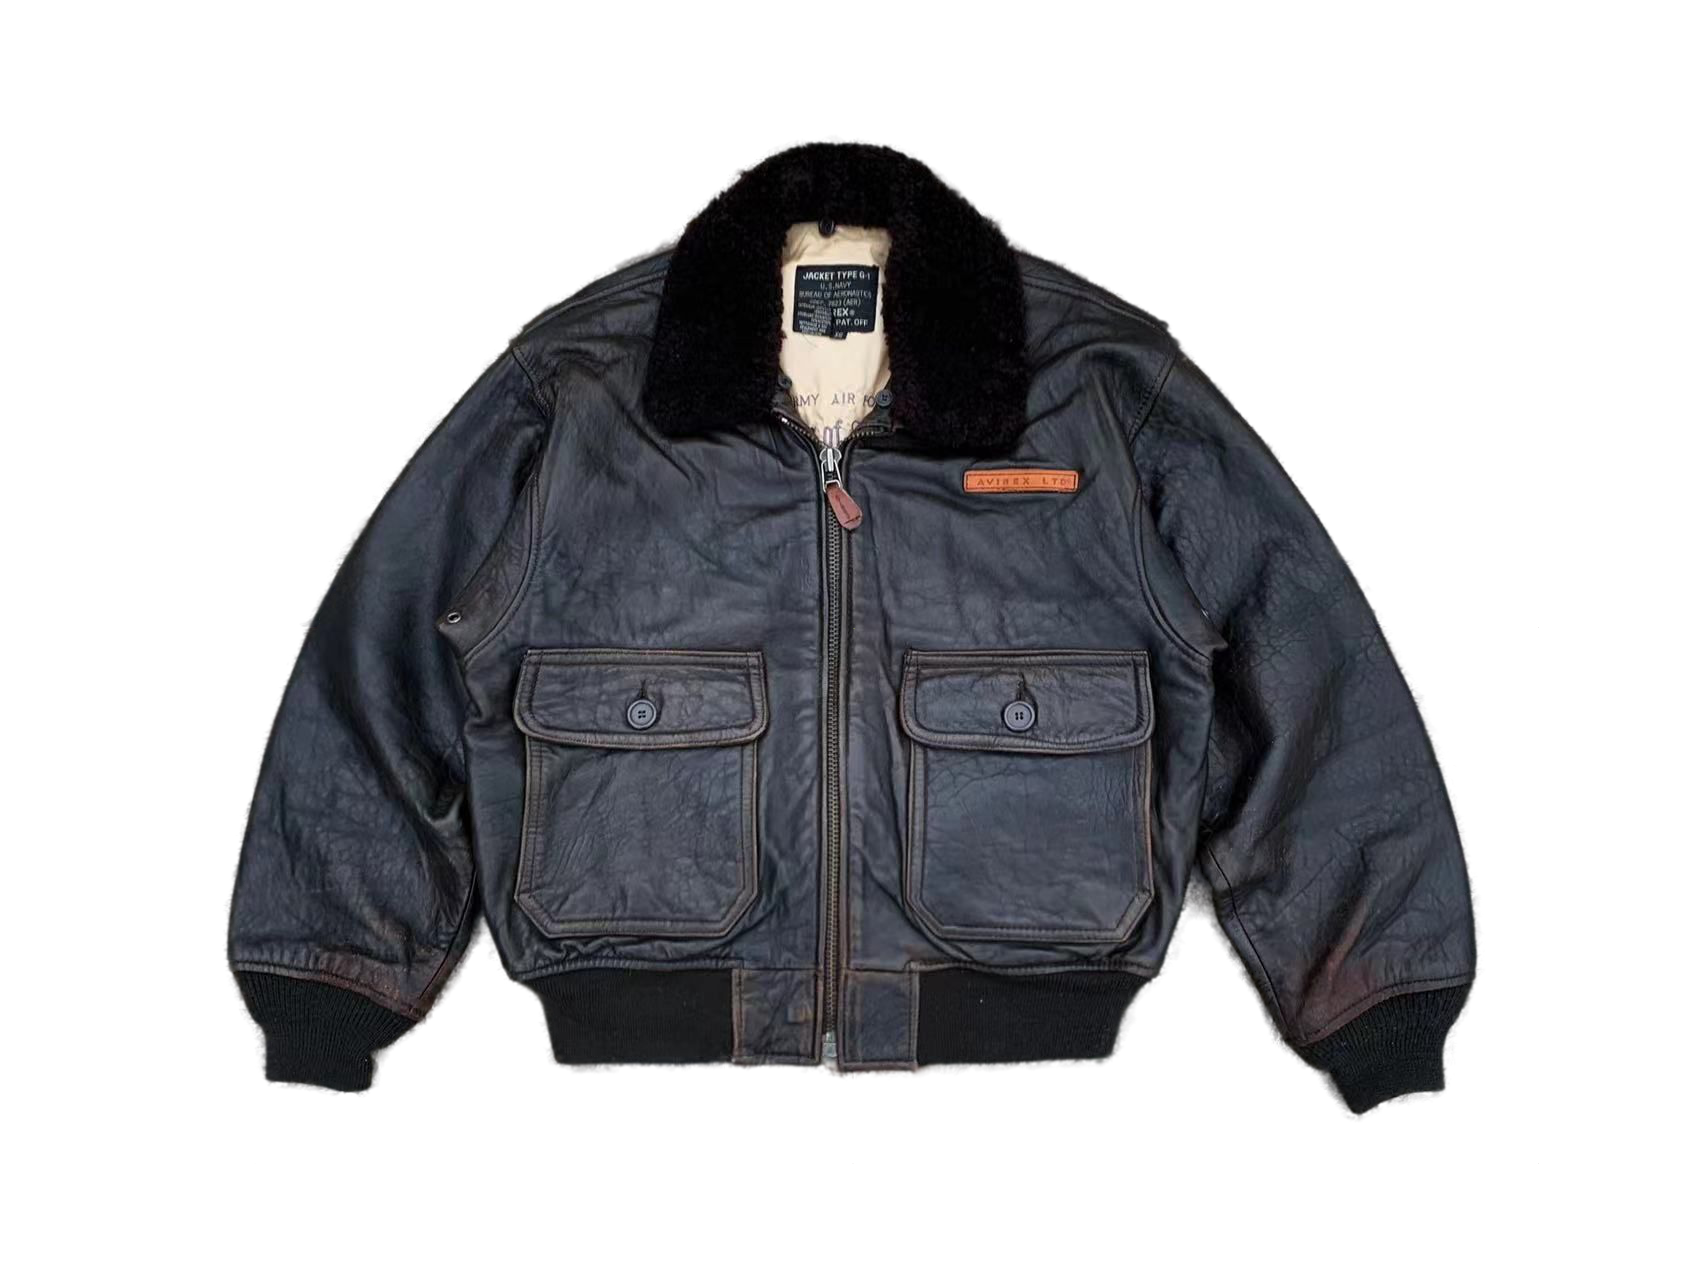 Avirex G1 Flight Leather Jacket 1987 size M - Kind Supply Co.